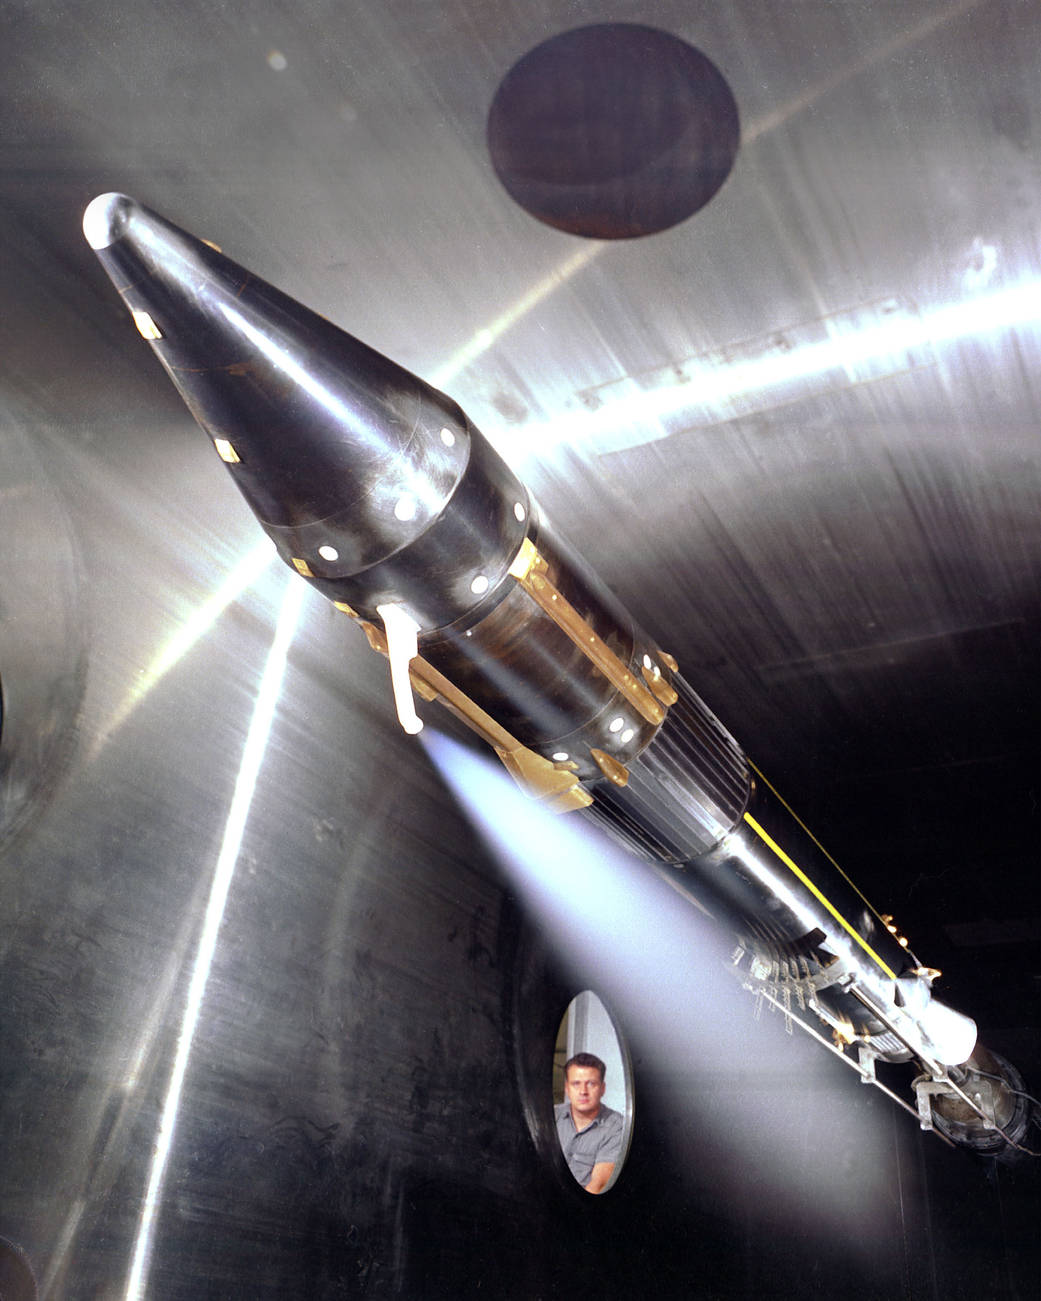 Large silver rocket model in wind tunnel pointed diagonally upward